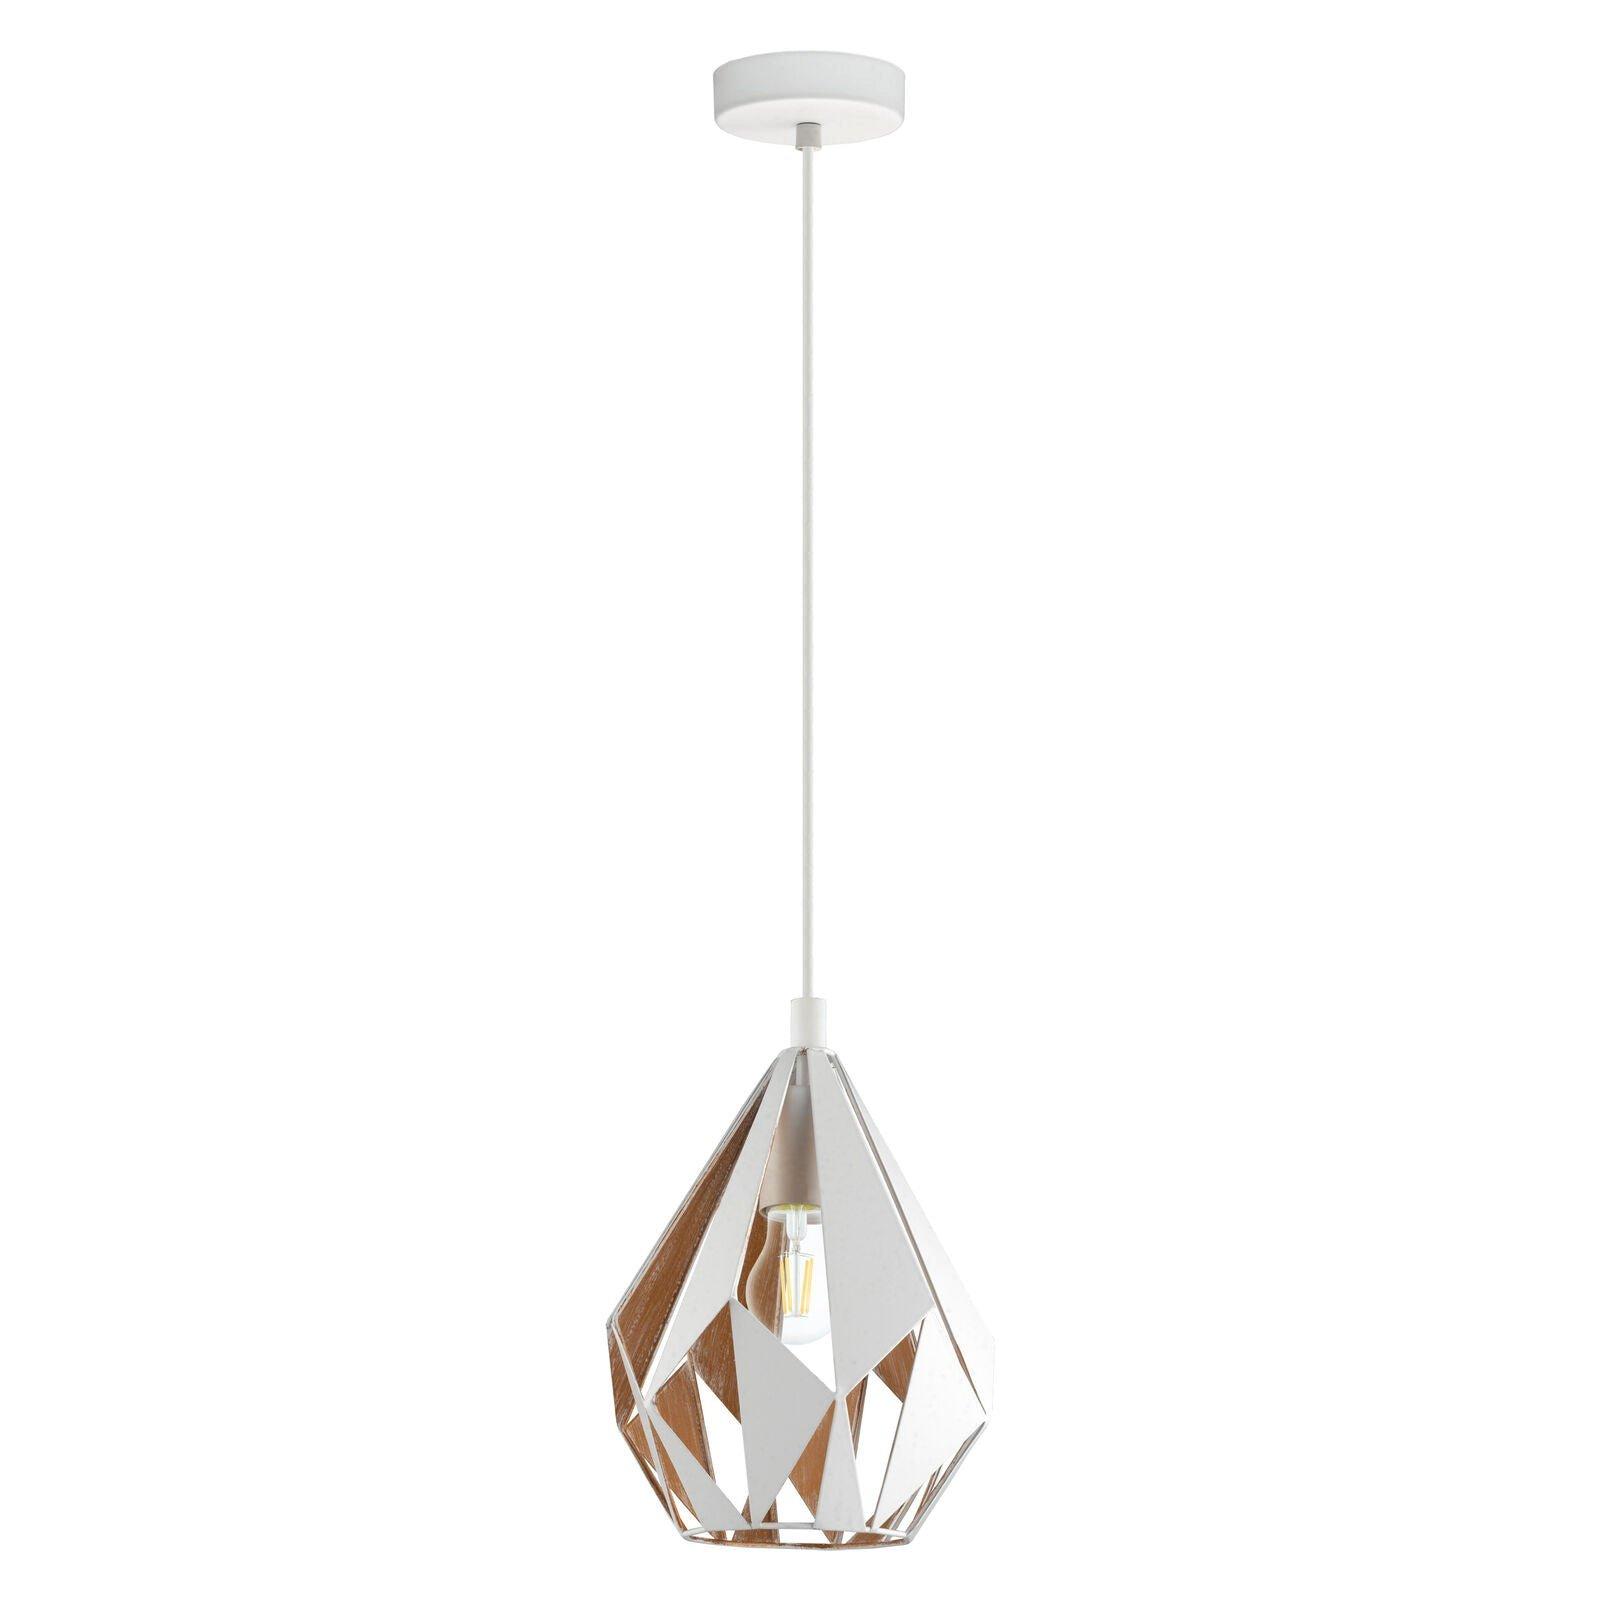 Hanging Ceiling Pendant Light White & Gold Geometric 1x 60W E27 Feature Lamp